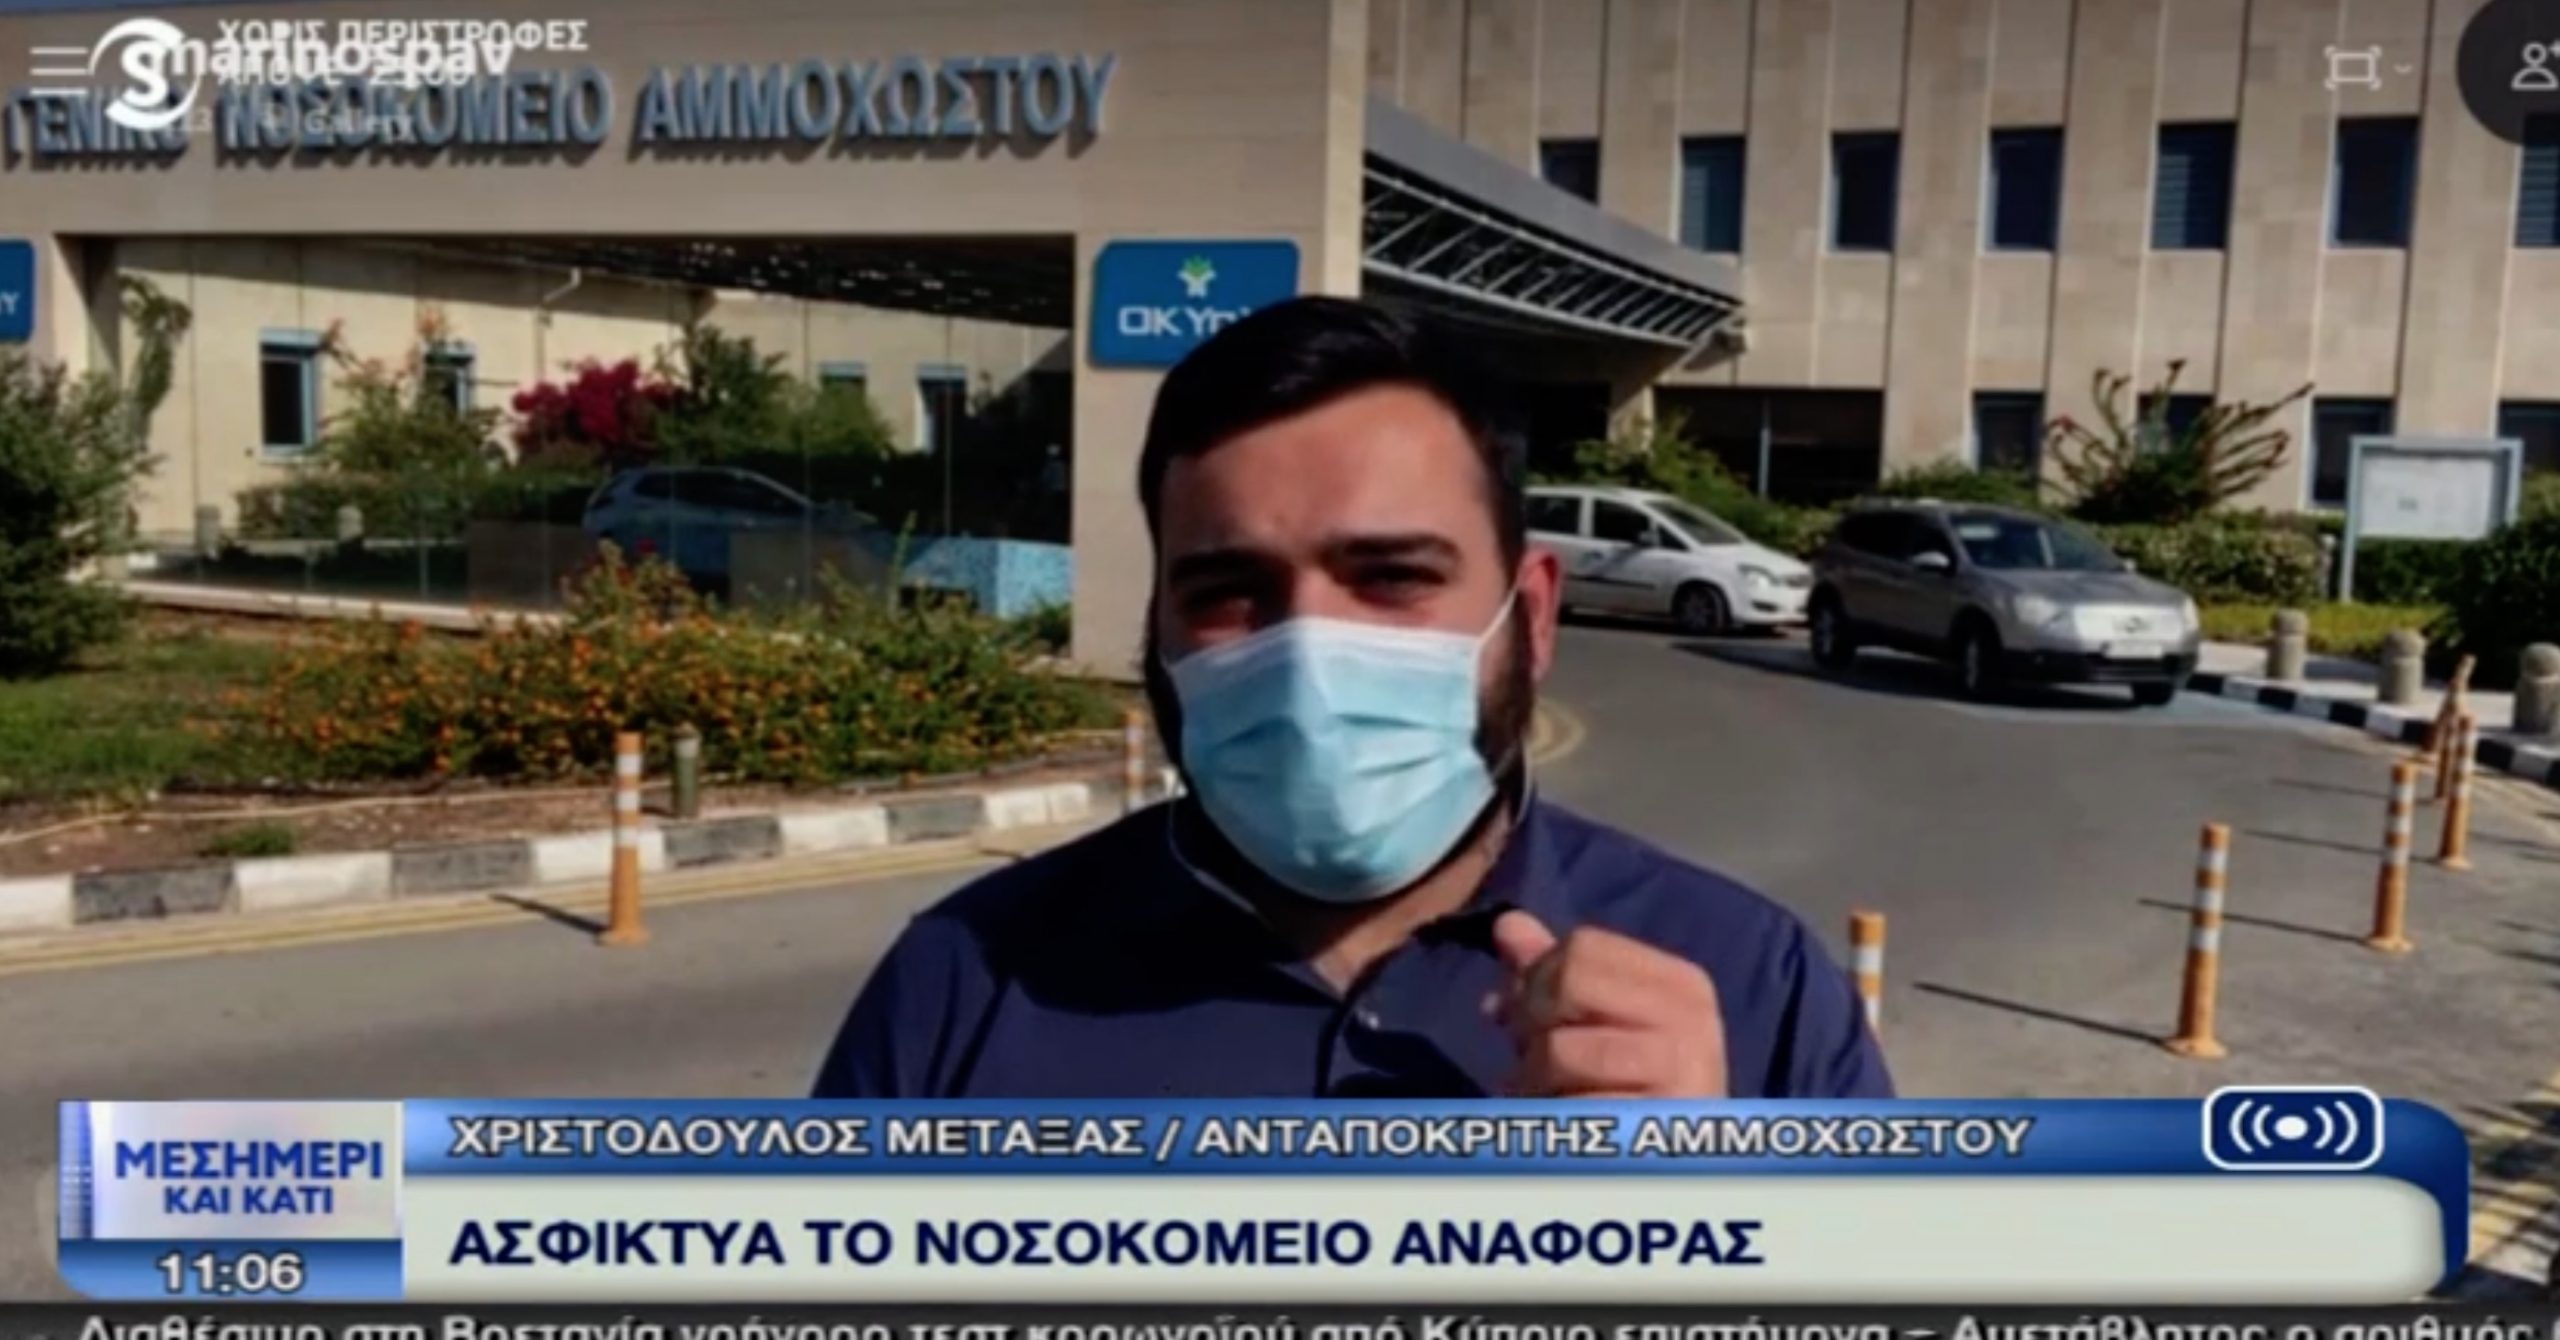 Snapshot 2020 11 10 11.48.46 scaled Famagusta General Hospital